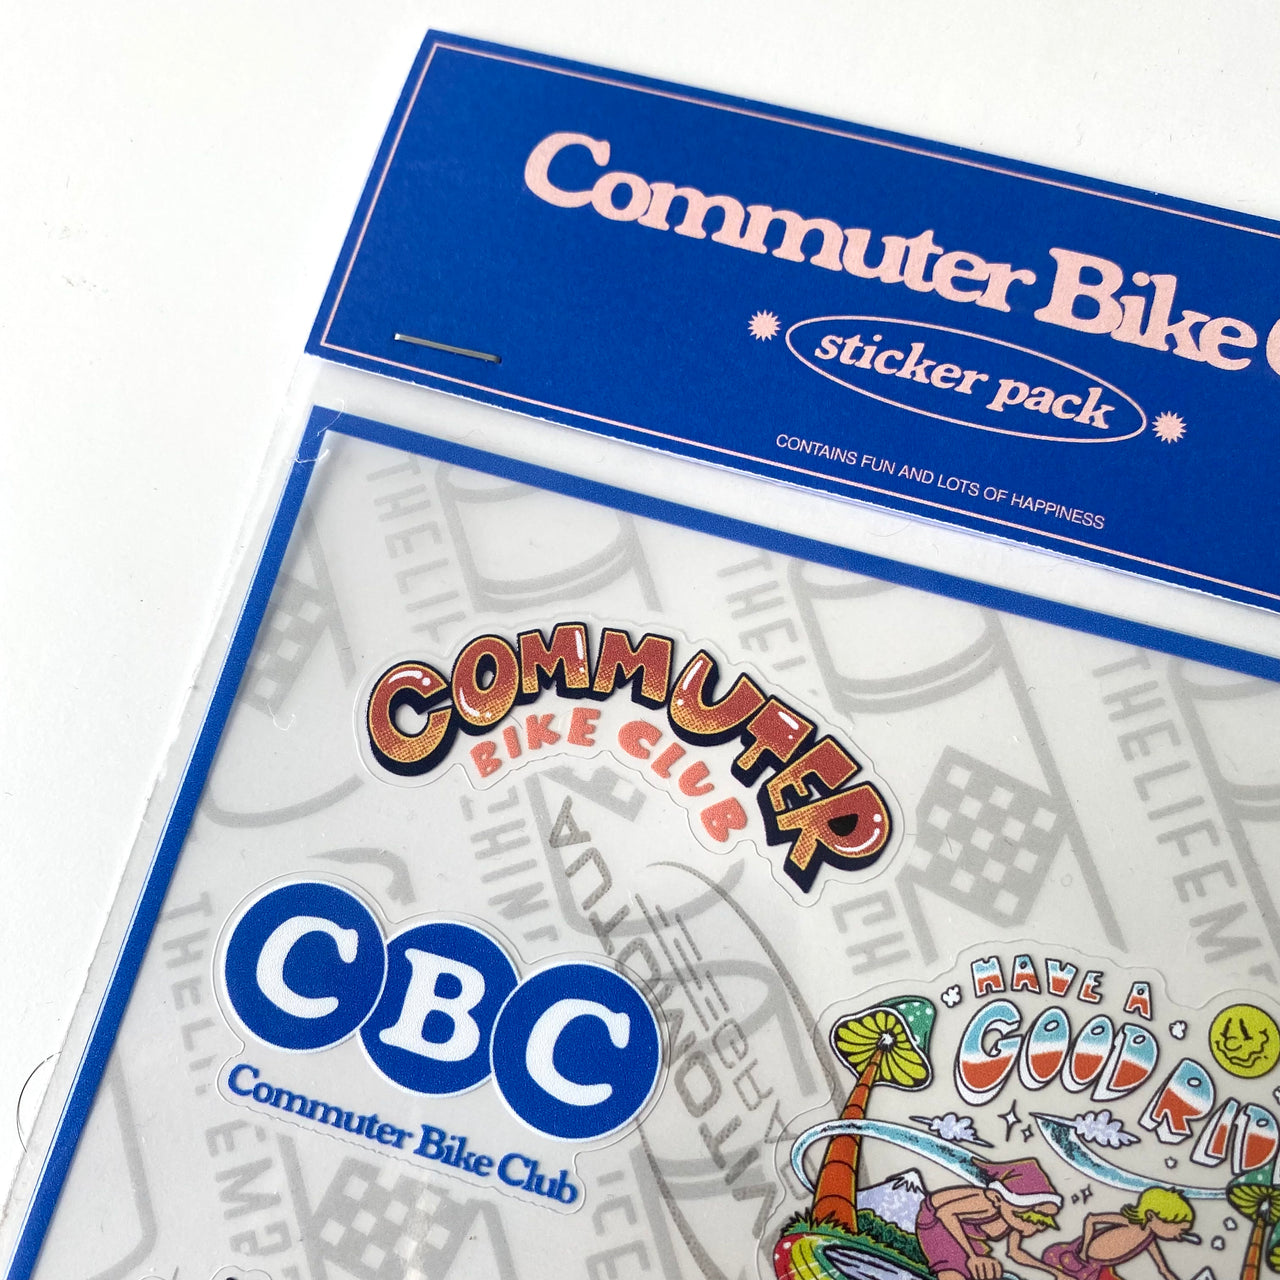 A-Sticker-Sheet by Commuter Bike Club, “Cycling is fun!”